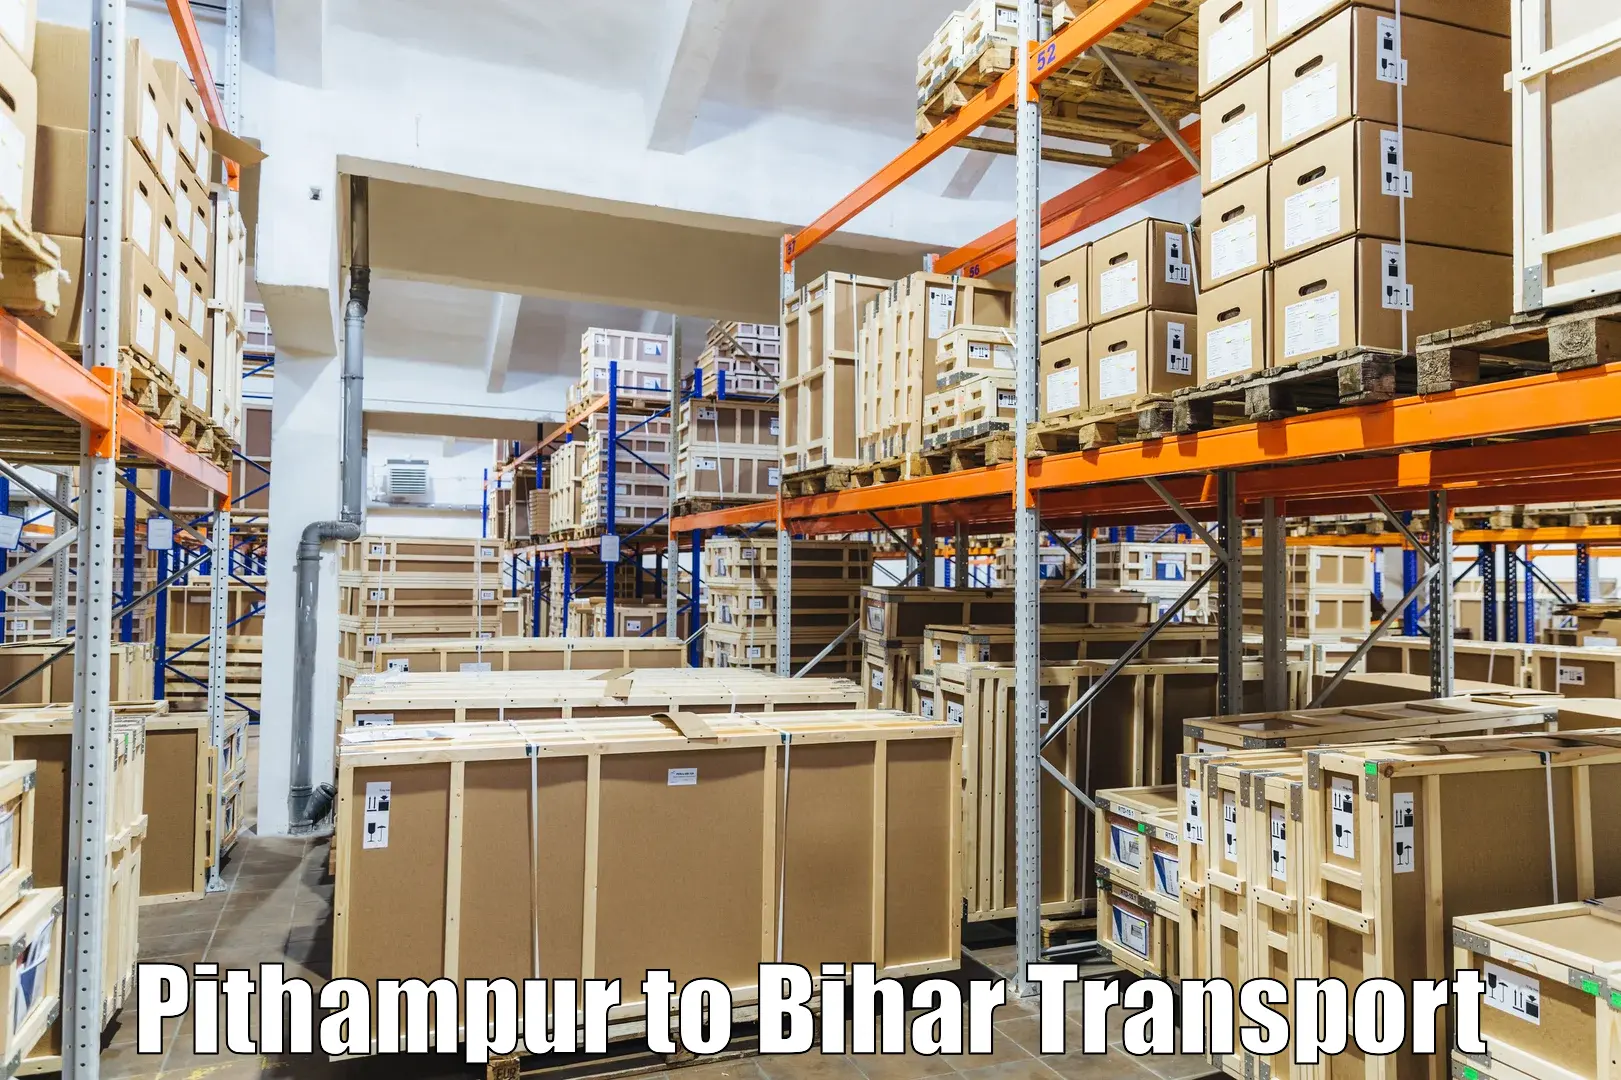 Shipping partner Pithampur to Barhiya